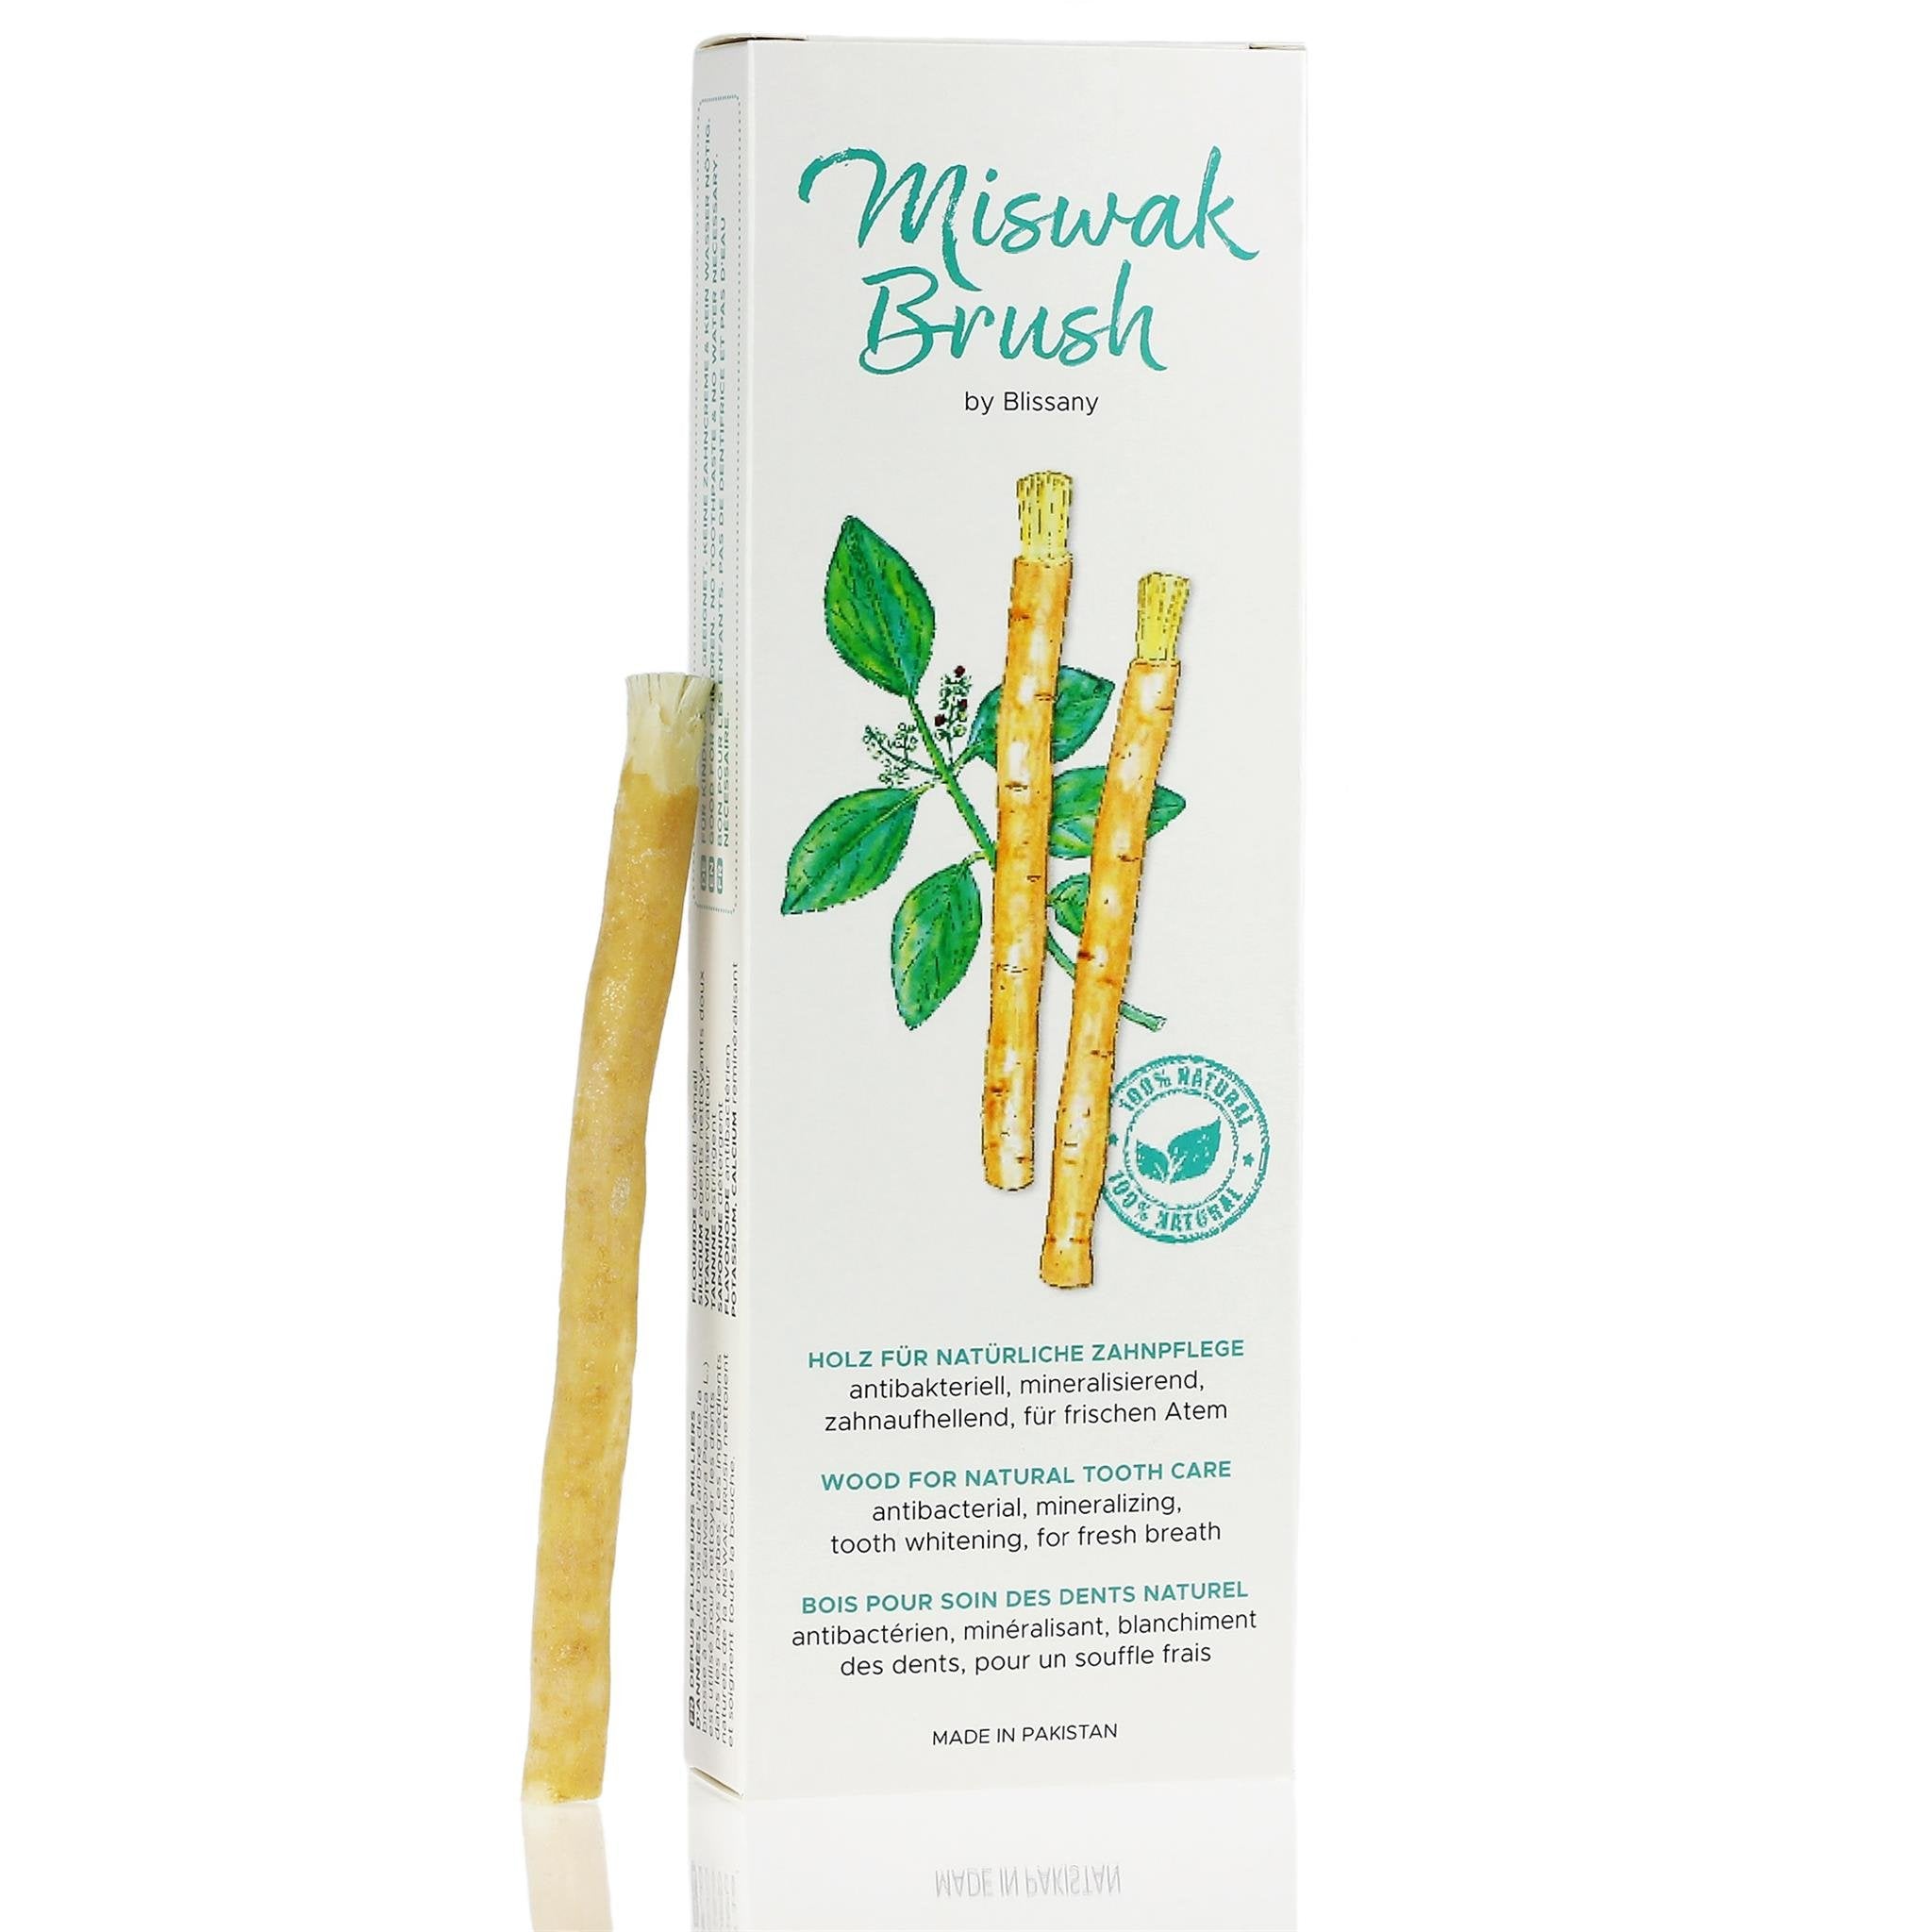 Miswak Toothbrush from blissany - Siwak SWAK, Traditional Arabian Toothbrush, Wooden Toothbrush, for Natural White Teeth, 5pcs